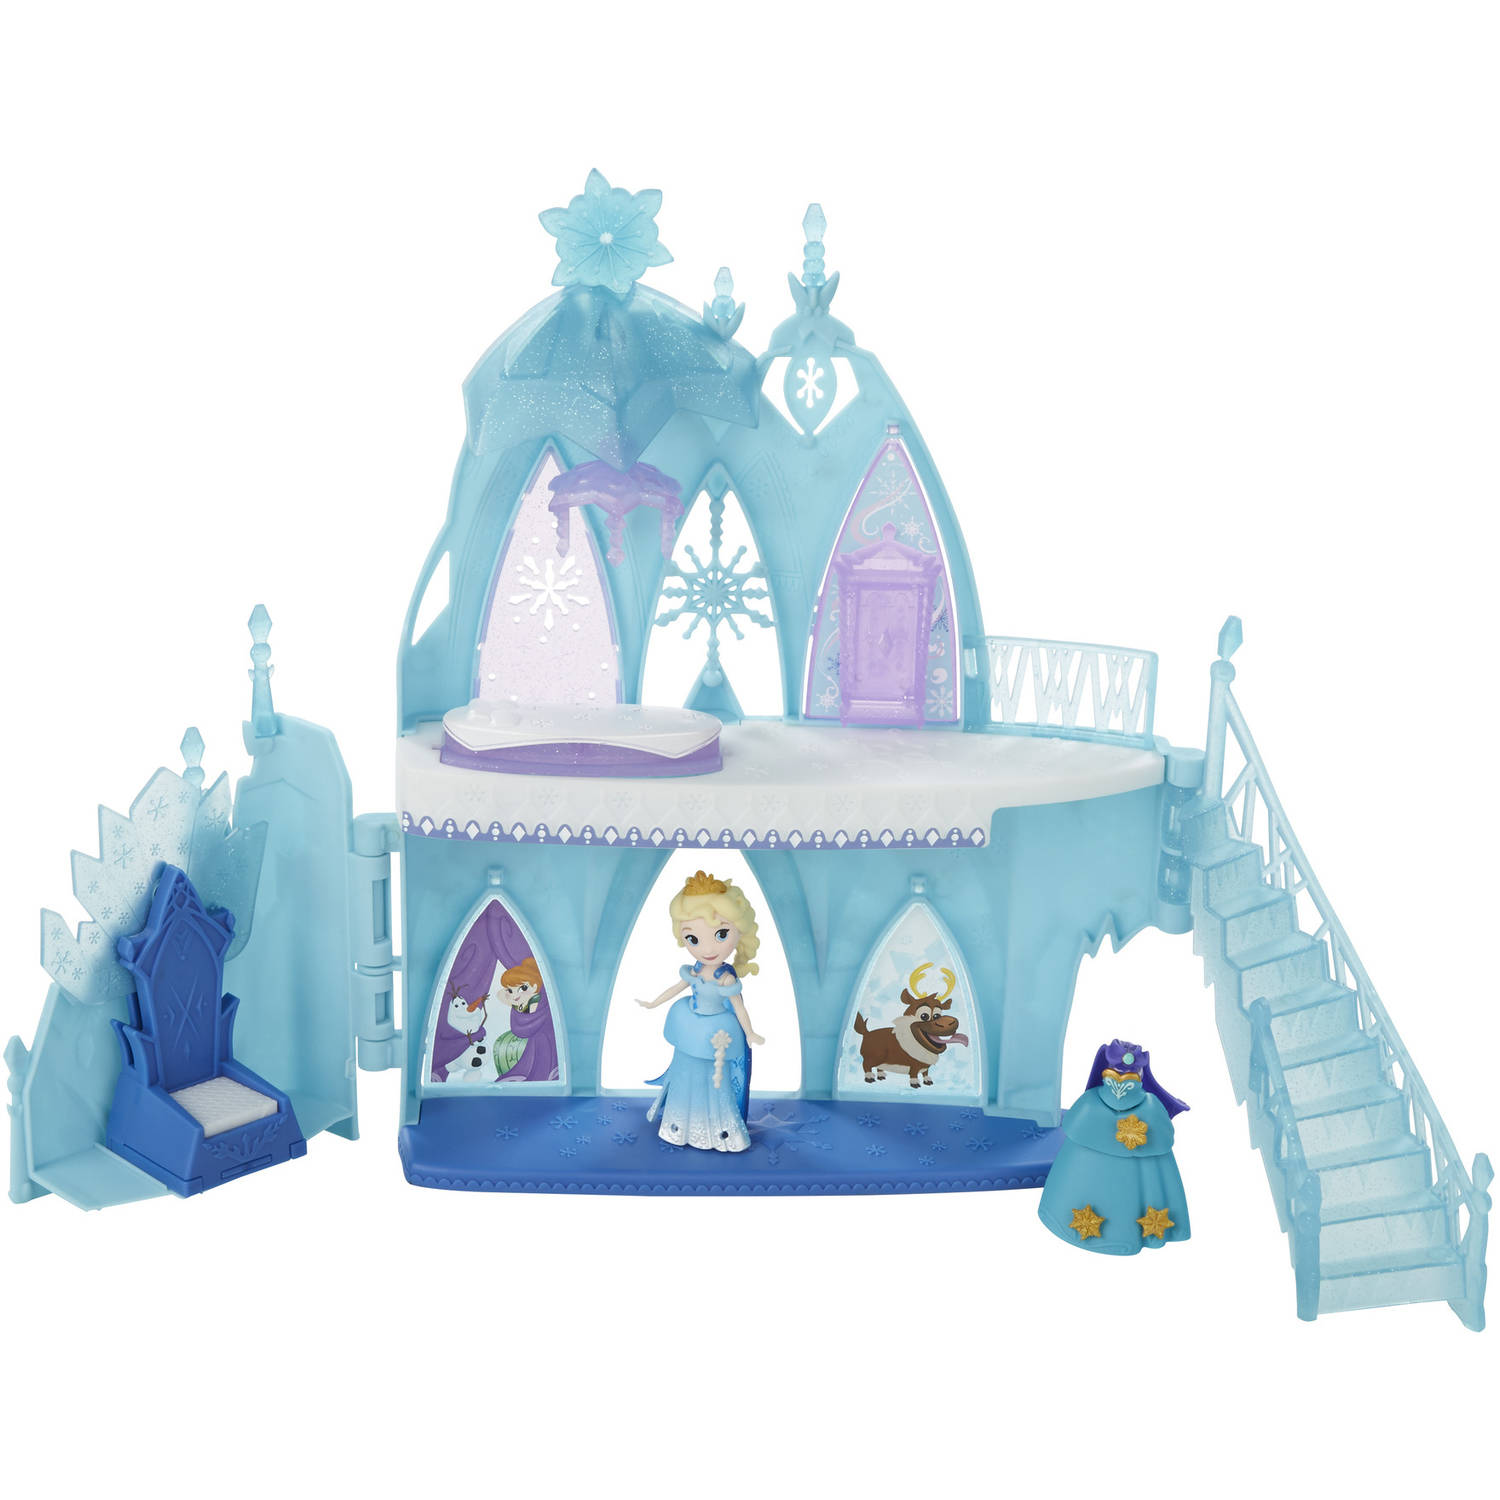 Disney Frozen Little Kingdom Elsa's Frozen Castle - image 1 of 12